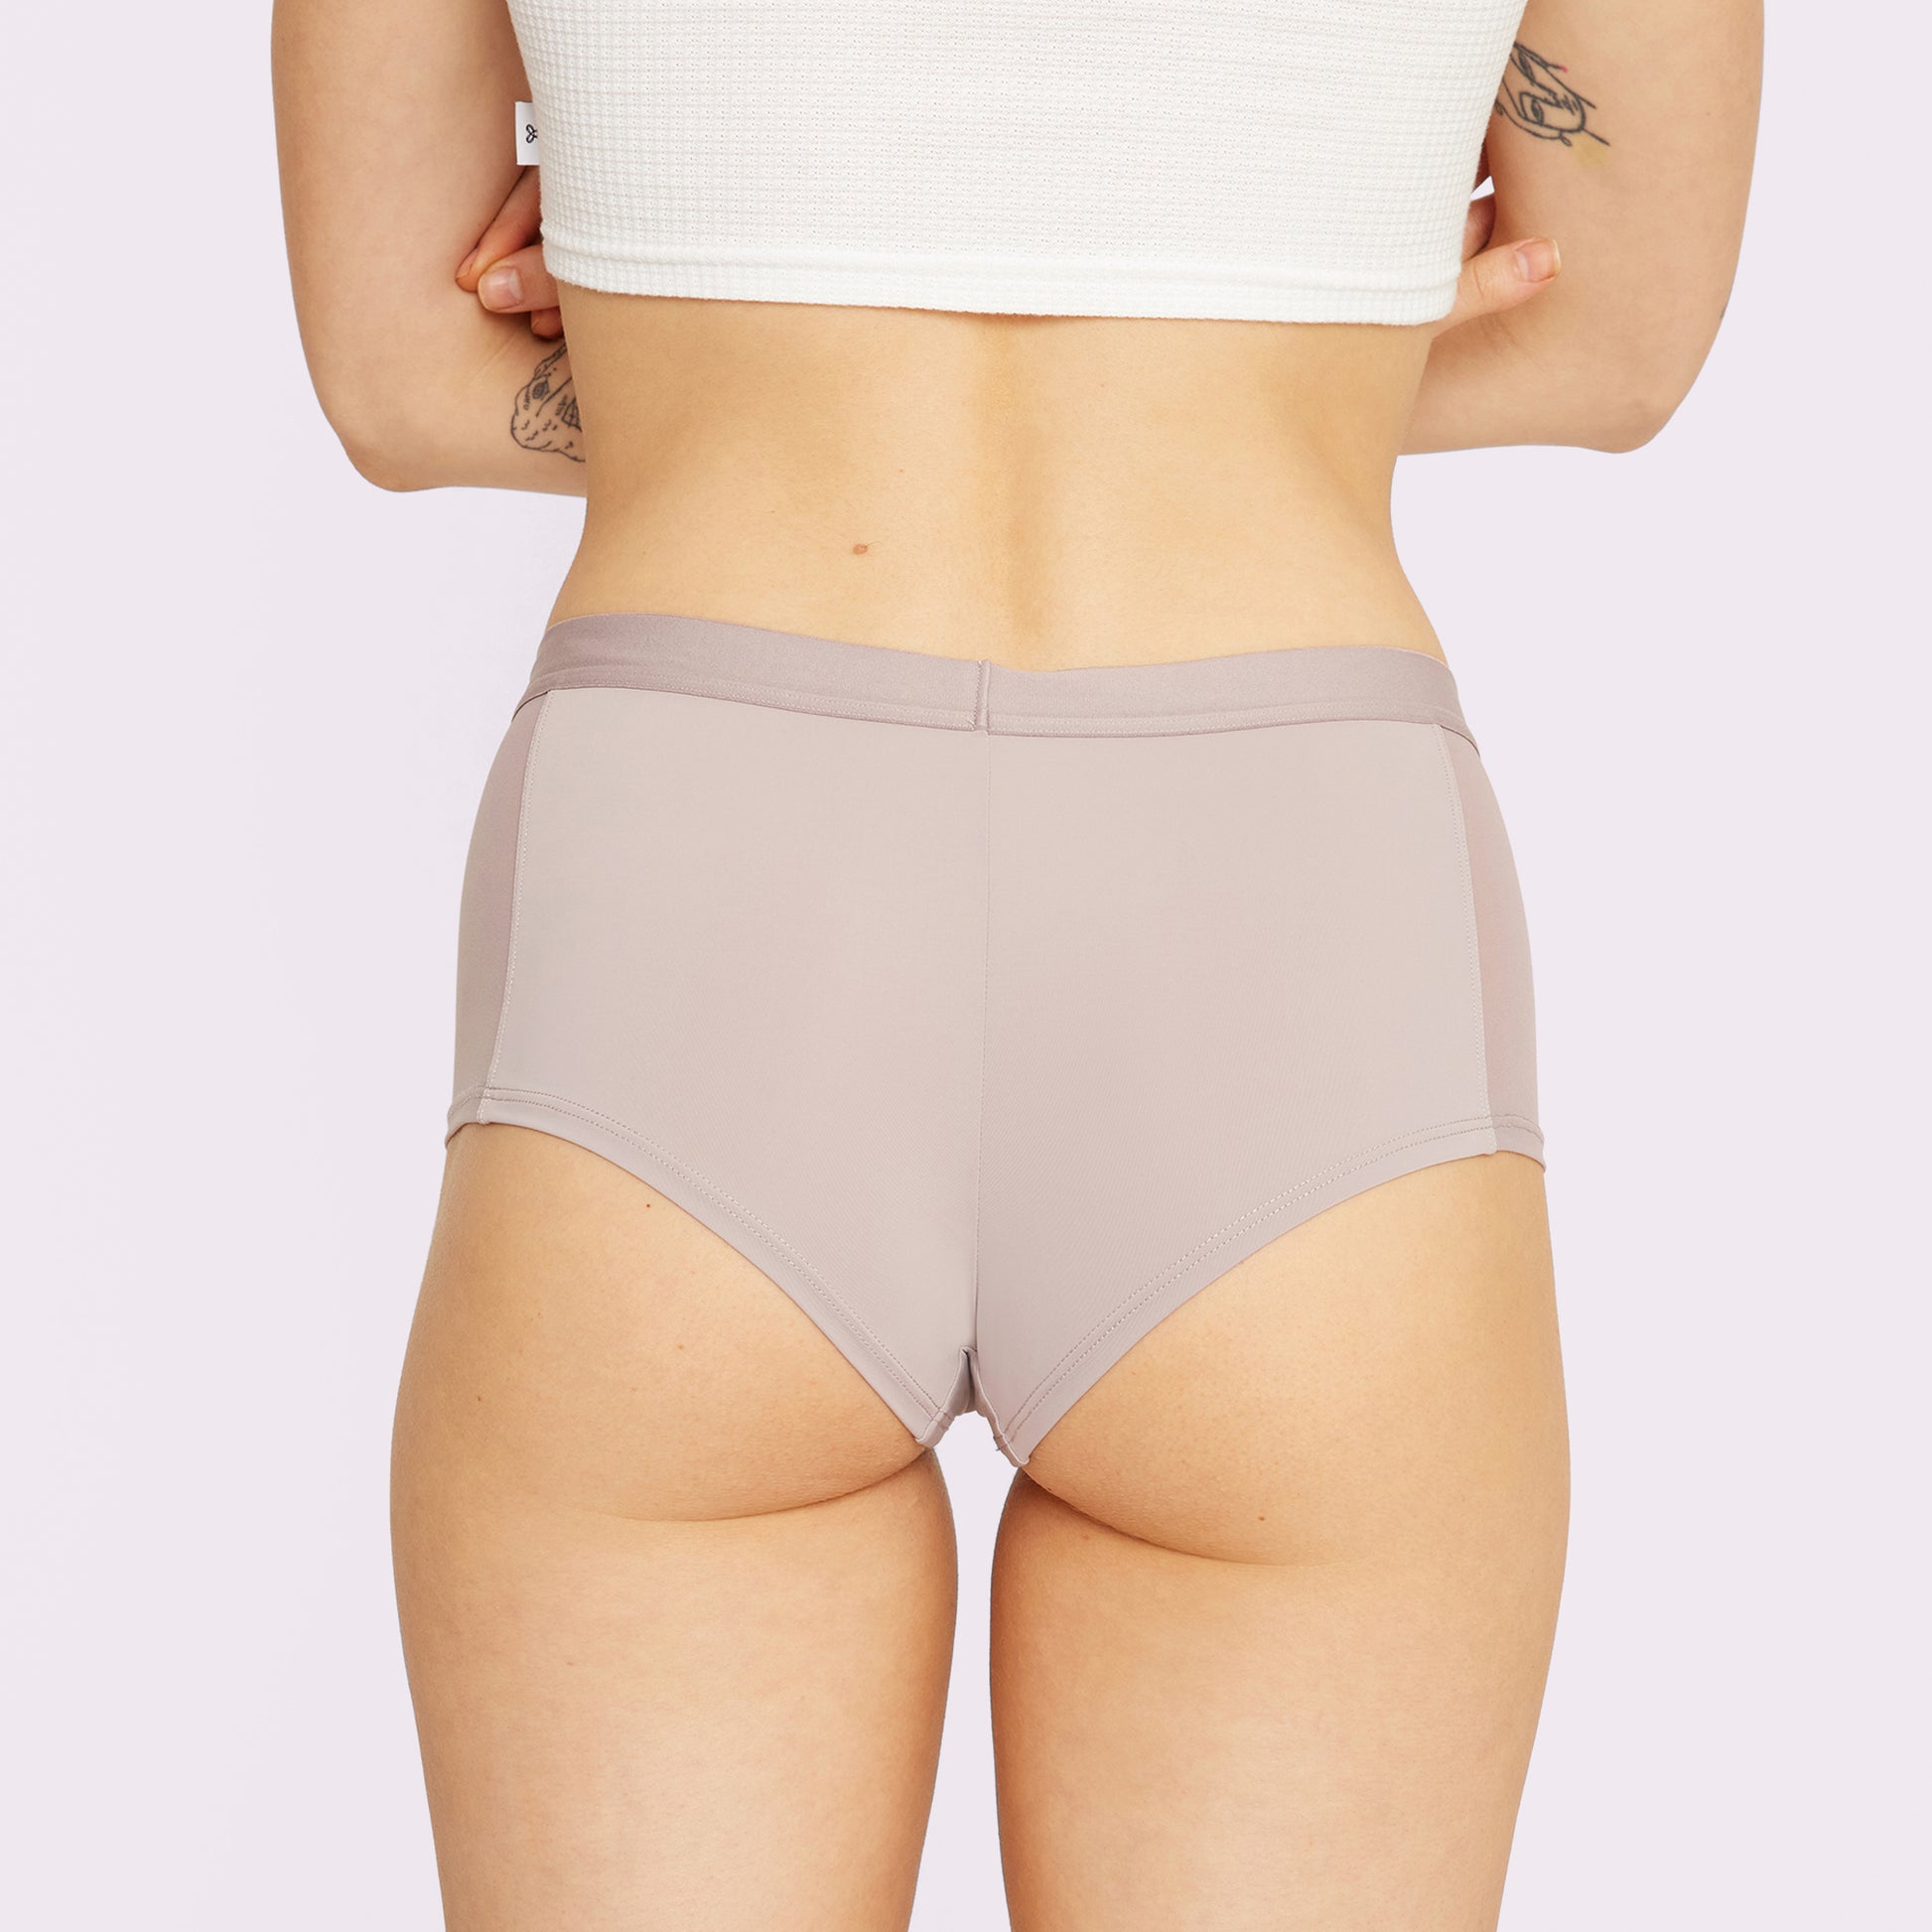 Boyshort | Women's Underwear | Starting at $9 | Parade